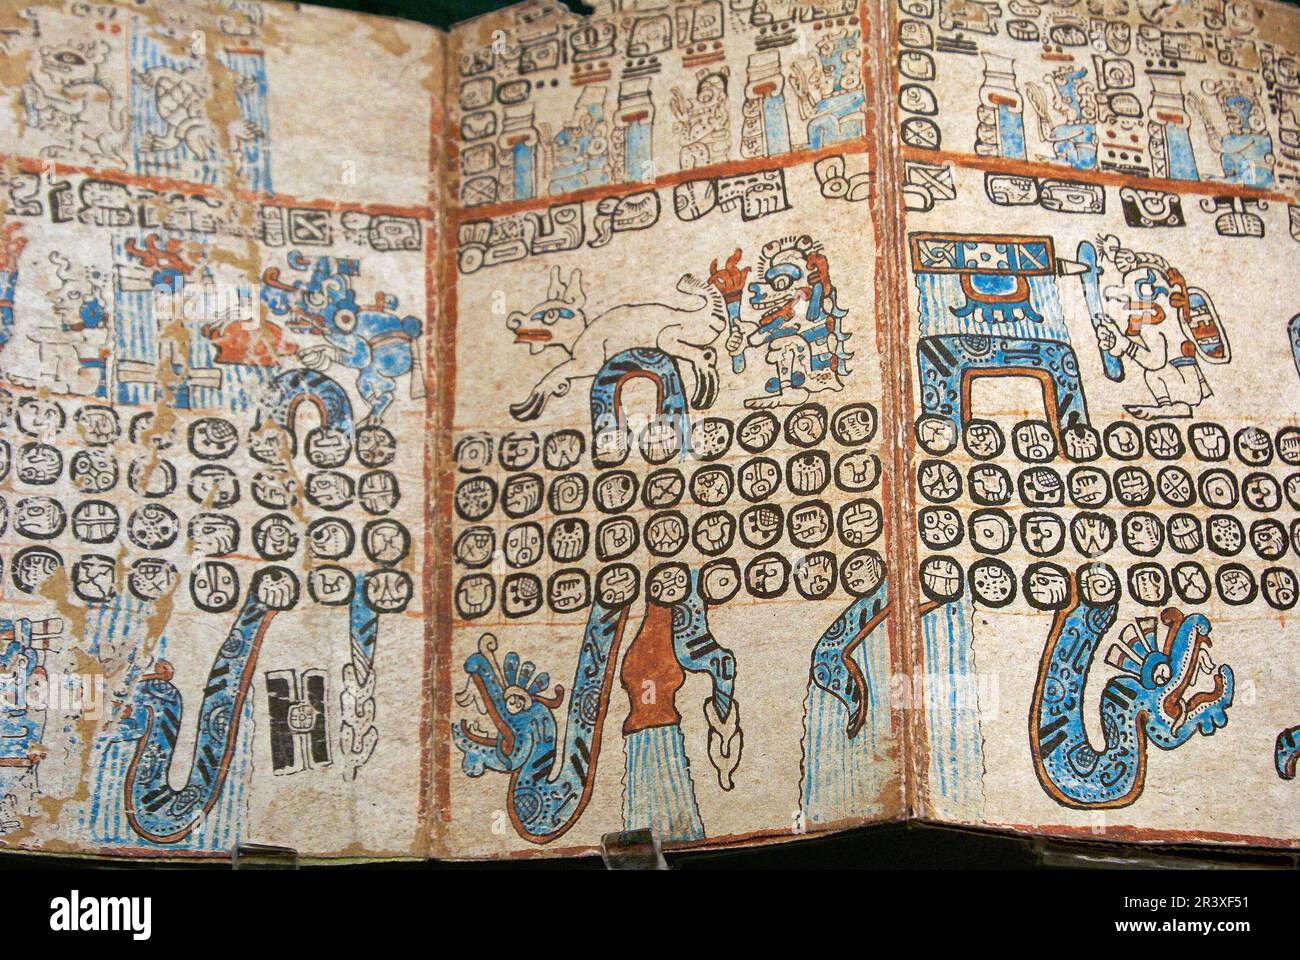 Códice Grolier. Cultura Maya. Museo Nacional de antropologia. Estado de Mexico D.F. Mexico. Stock Photo